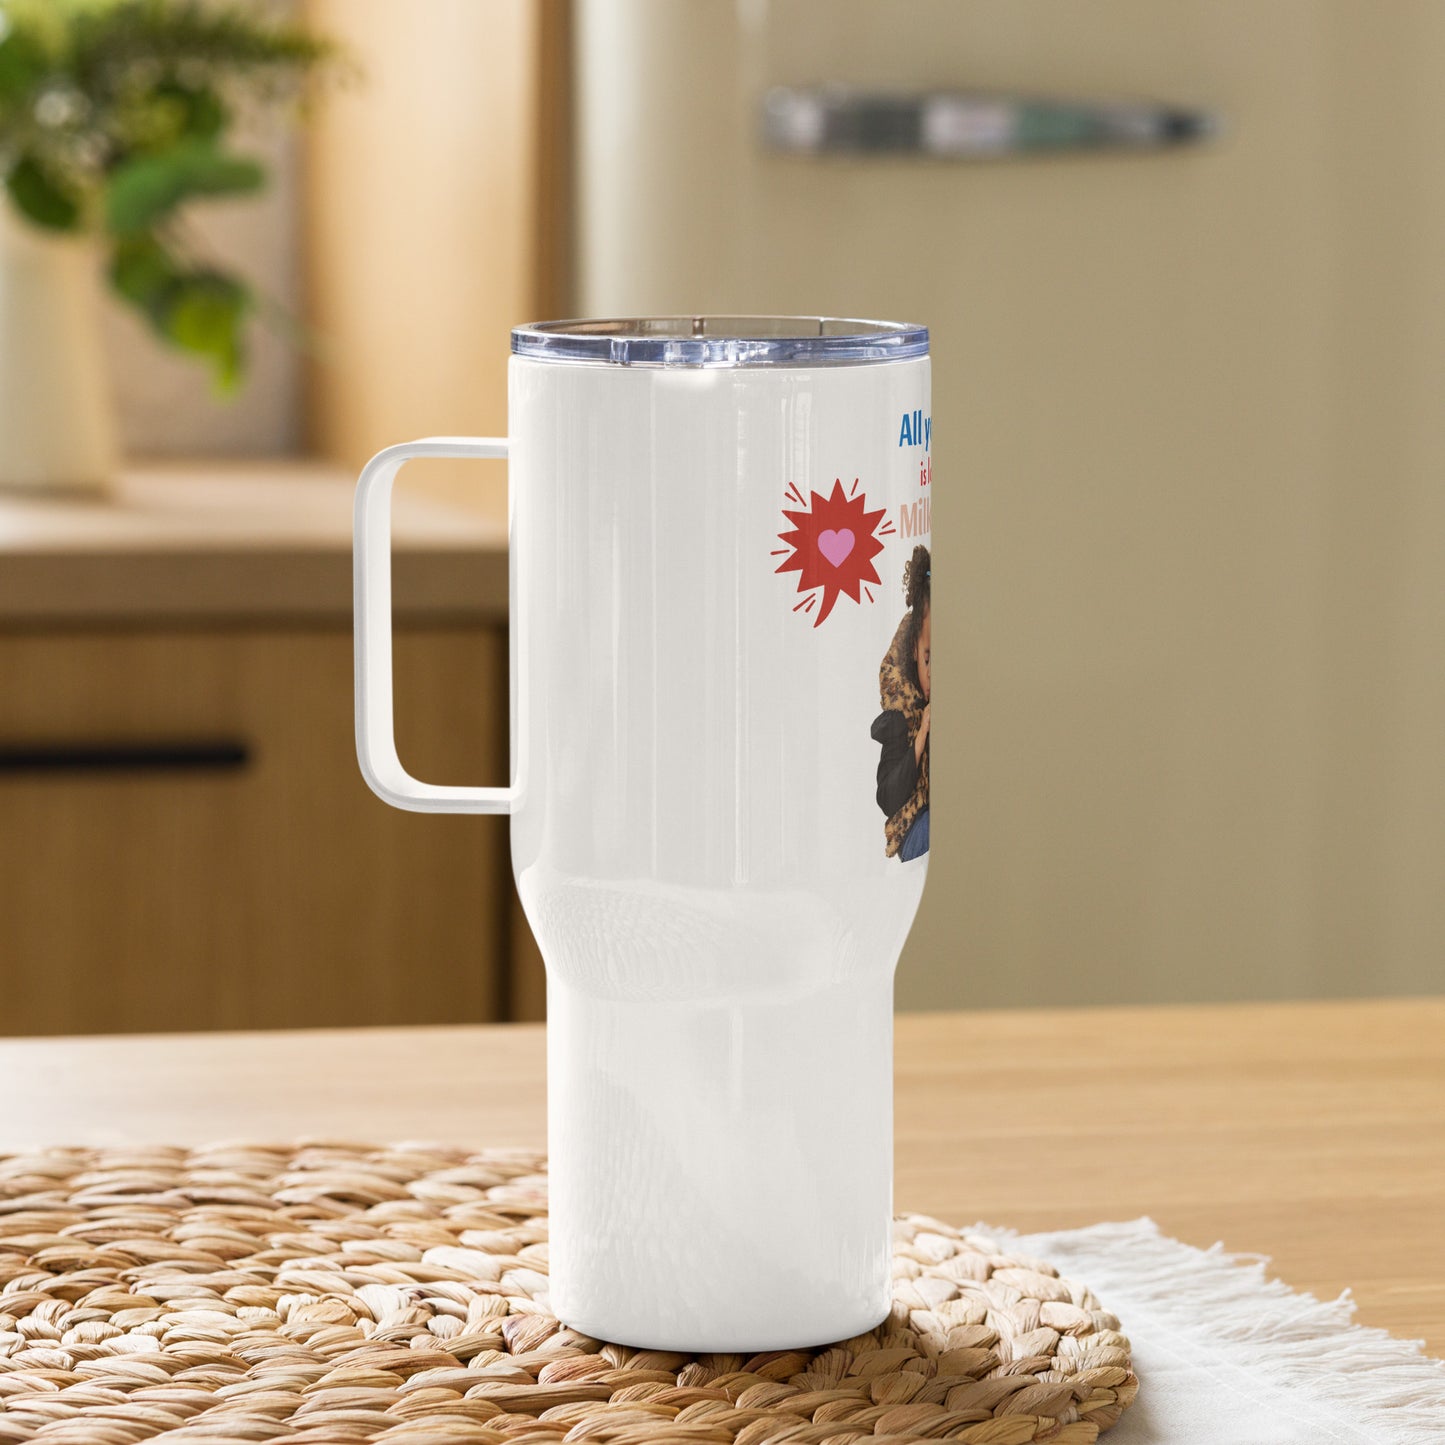 Travel mug with a handle - All You Need is Love and Milkshakes say "Lailani and Koe Lee"